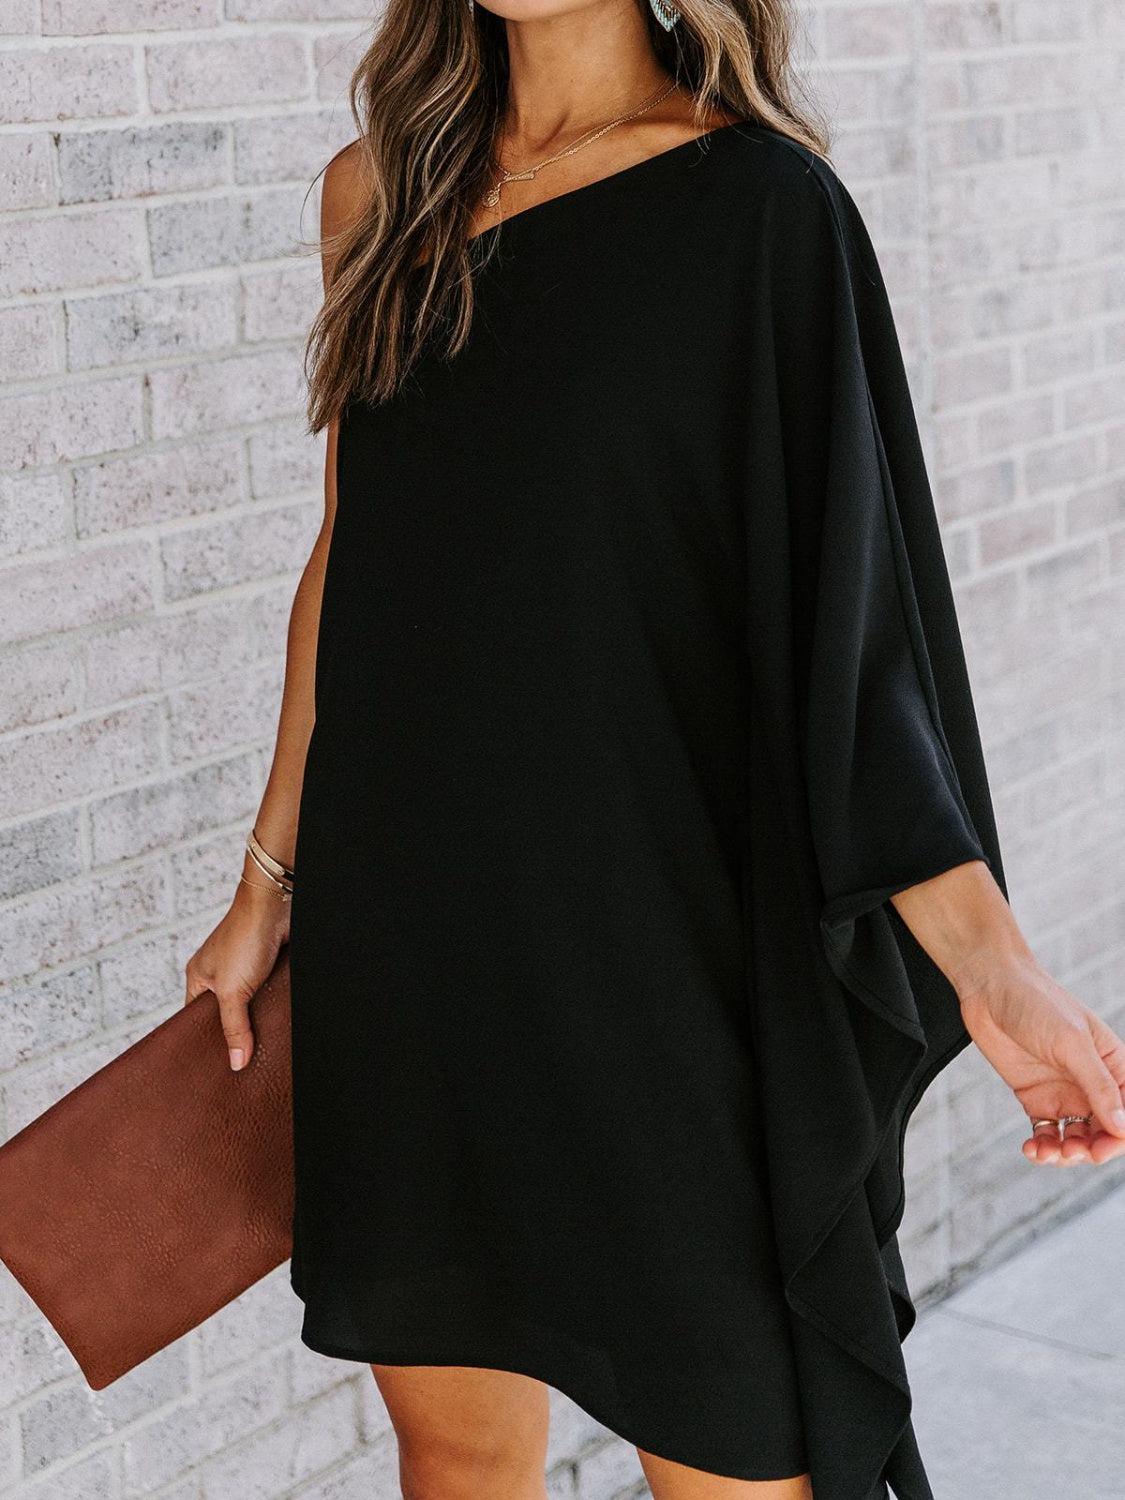 a woman wearing a black one shoulder dress